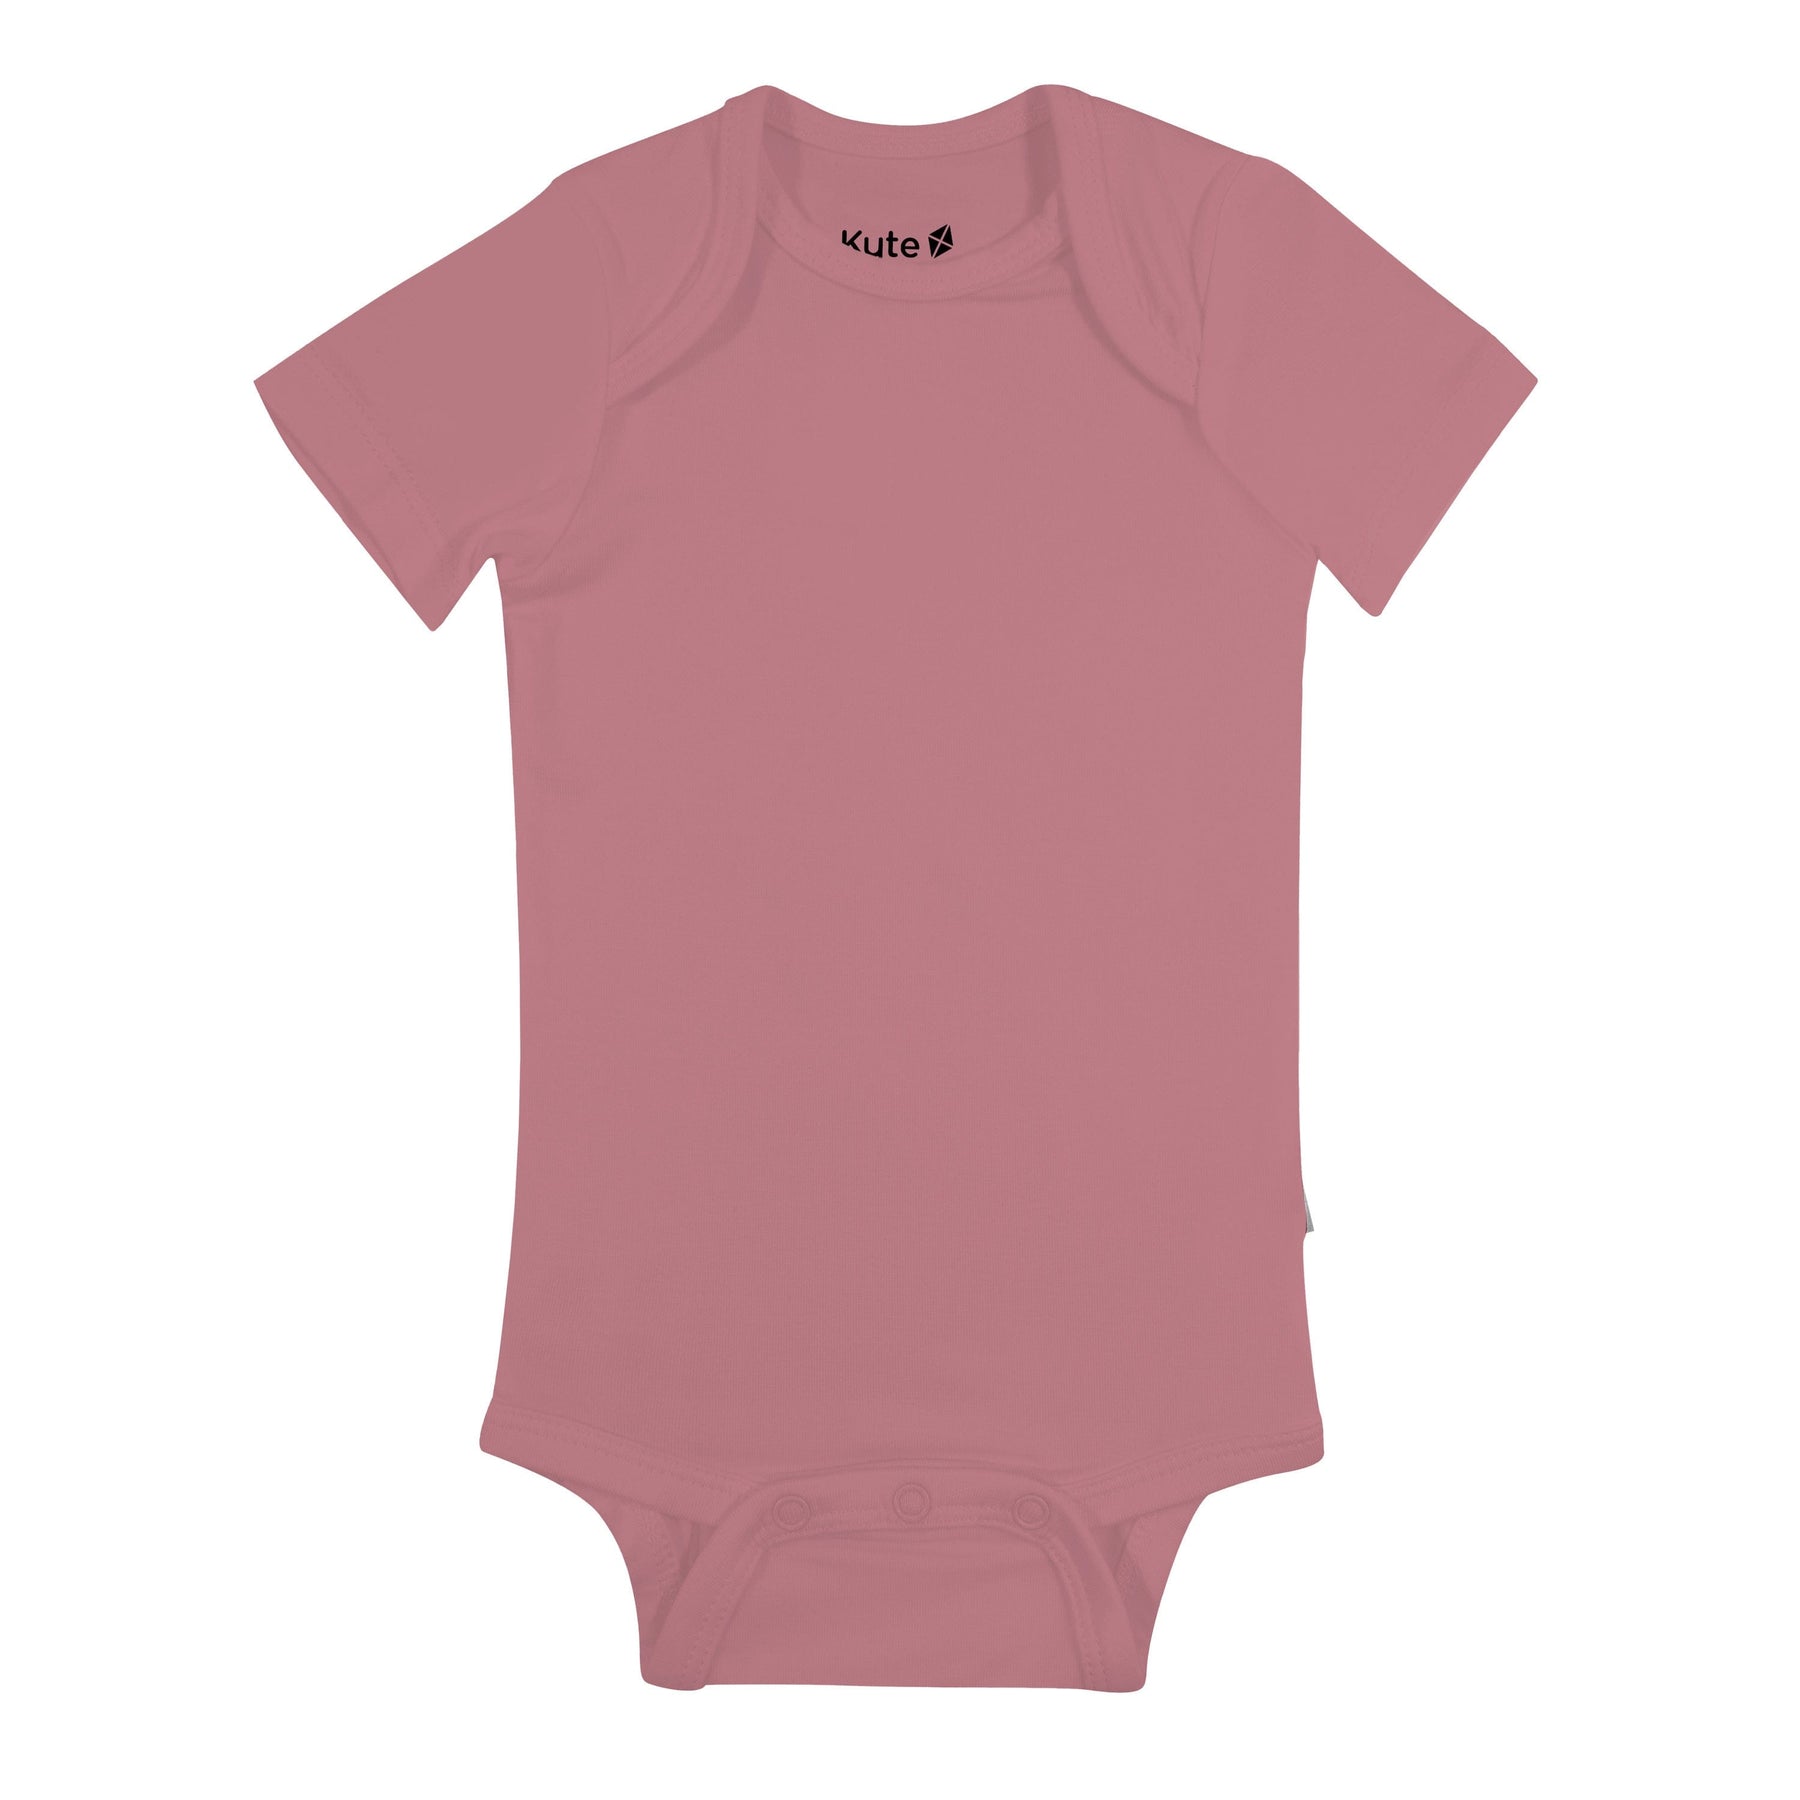 Kyte Baby Short Sleeve Bodysuits Bodysuit in Dusty Rose